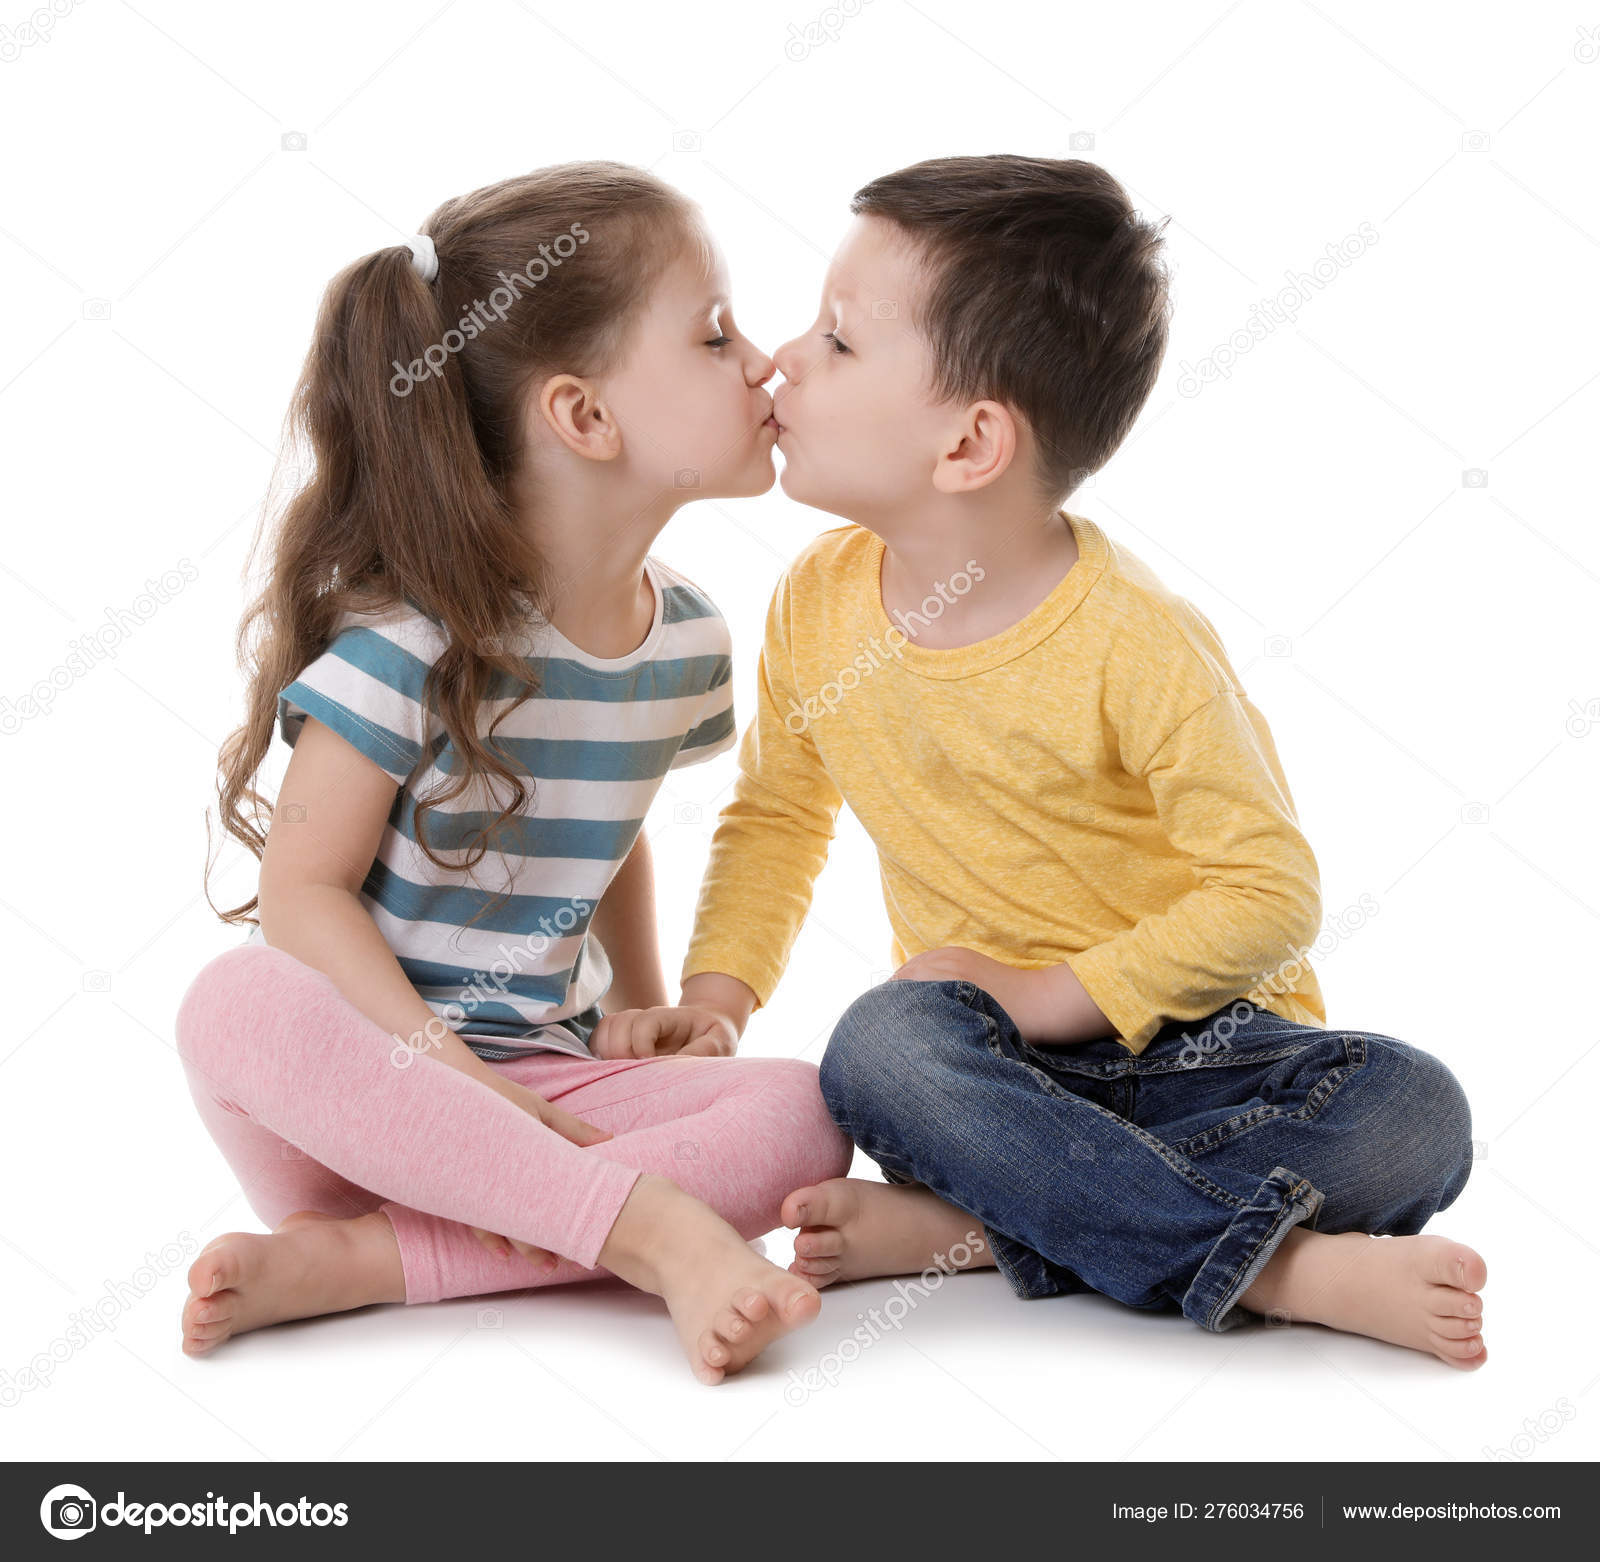 Licking boy girl. Литтл Киссинг. Поцелуй мальчика и девочки. Мальчик целует девочку. Целовашки мальчик с девочкой.